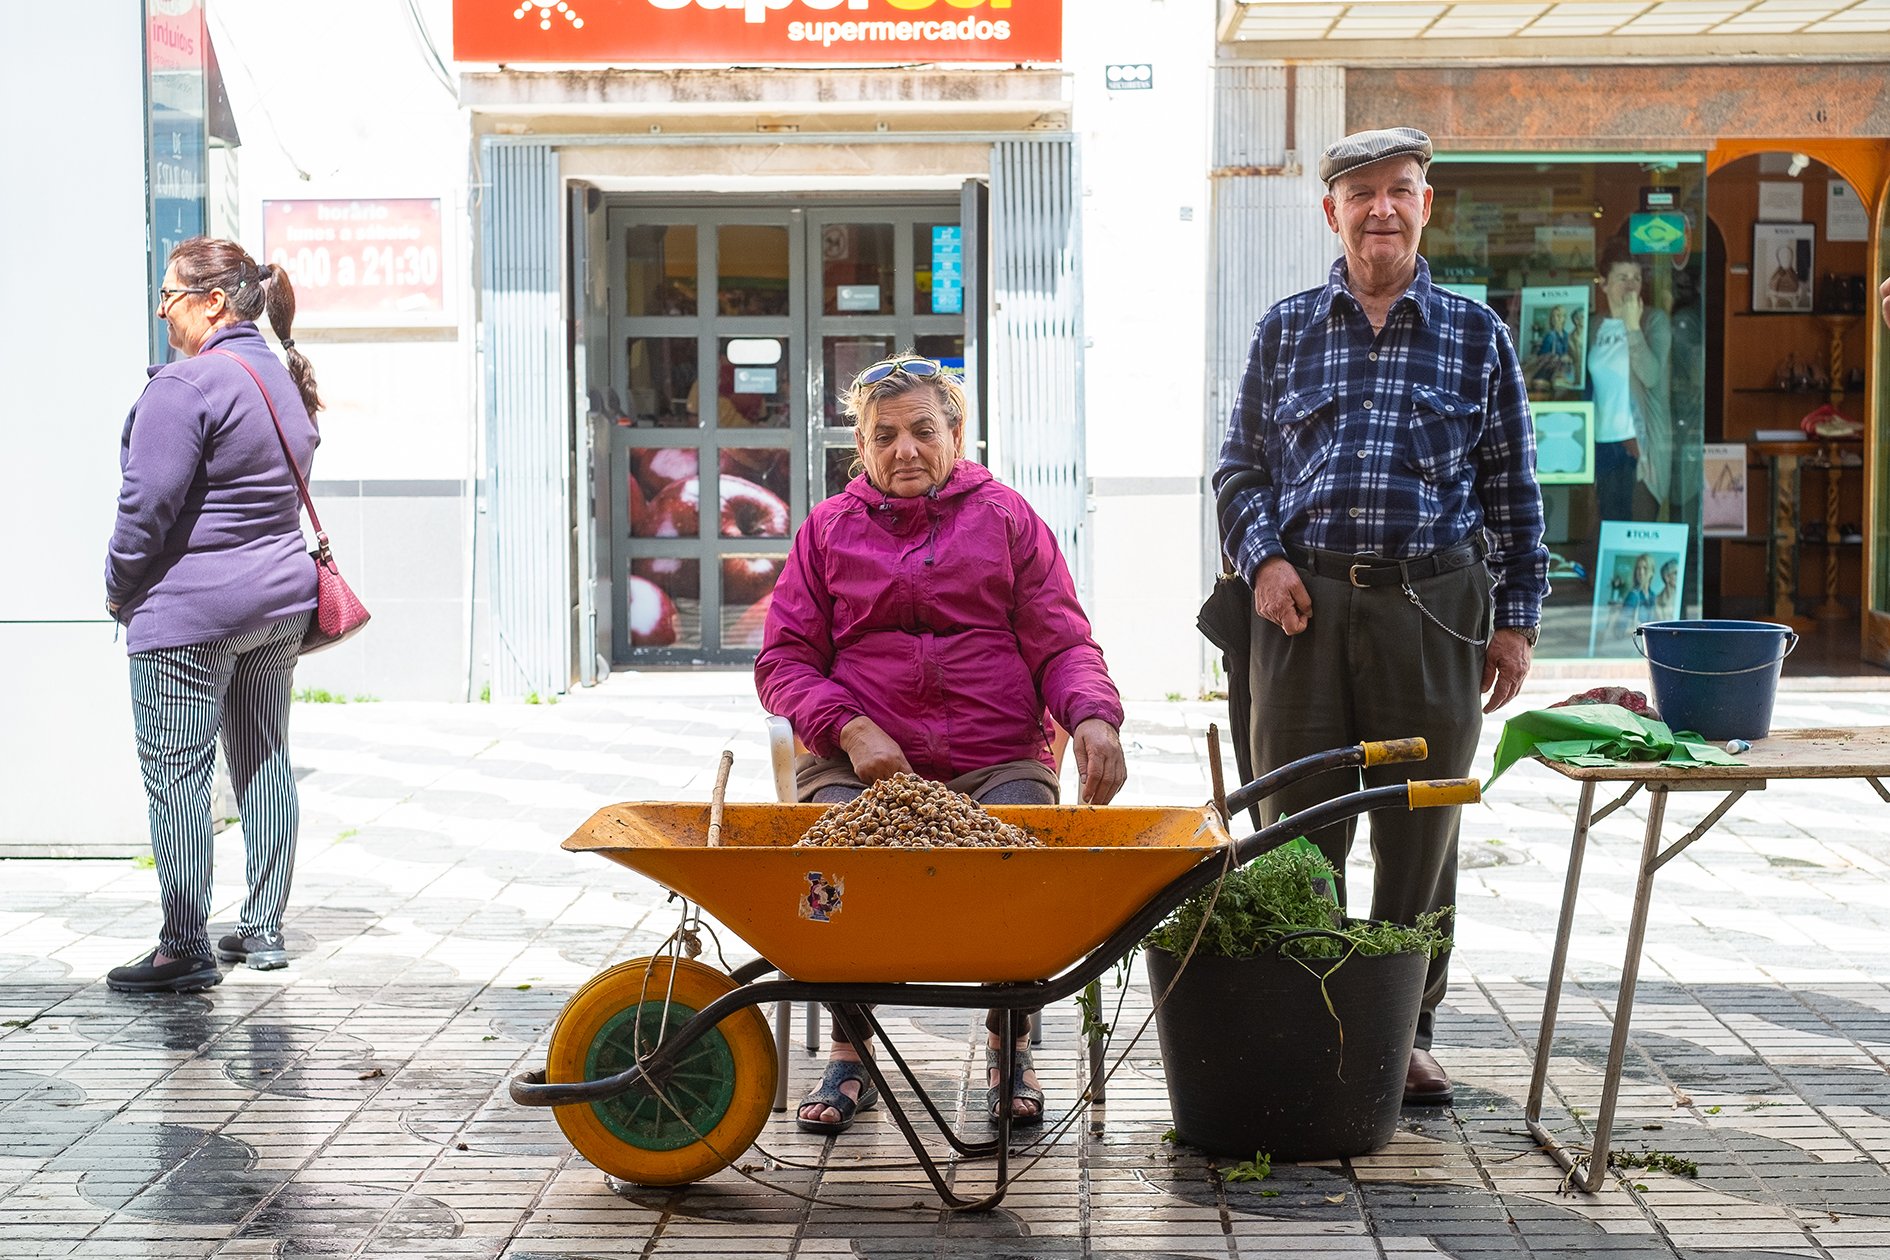 Vendedores de caracoles. Barbate, Cádiz.